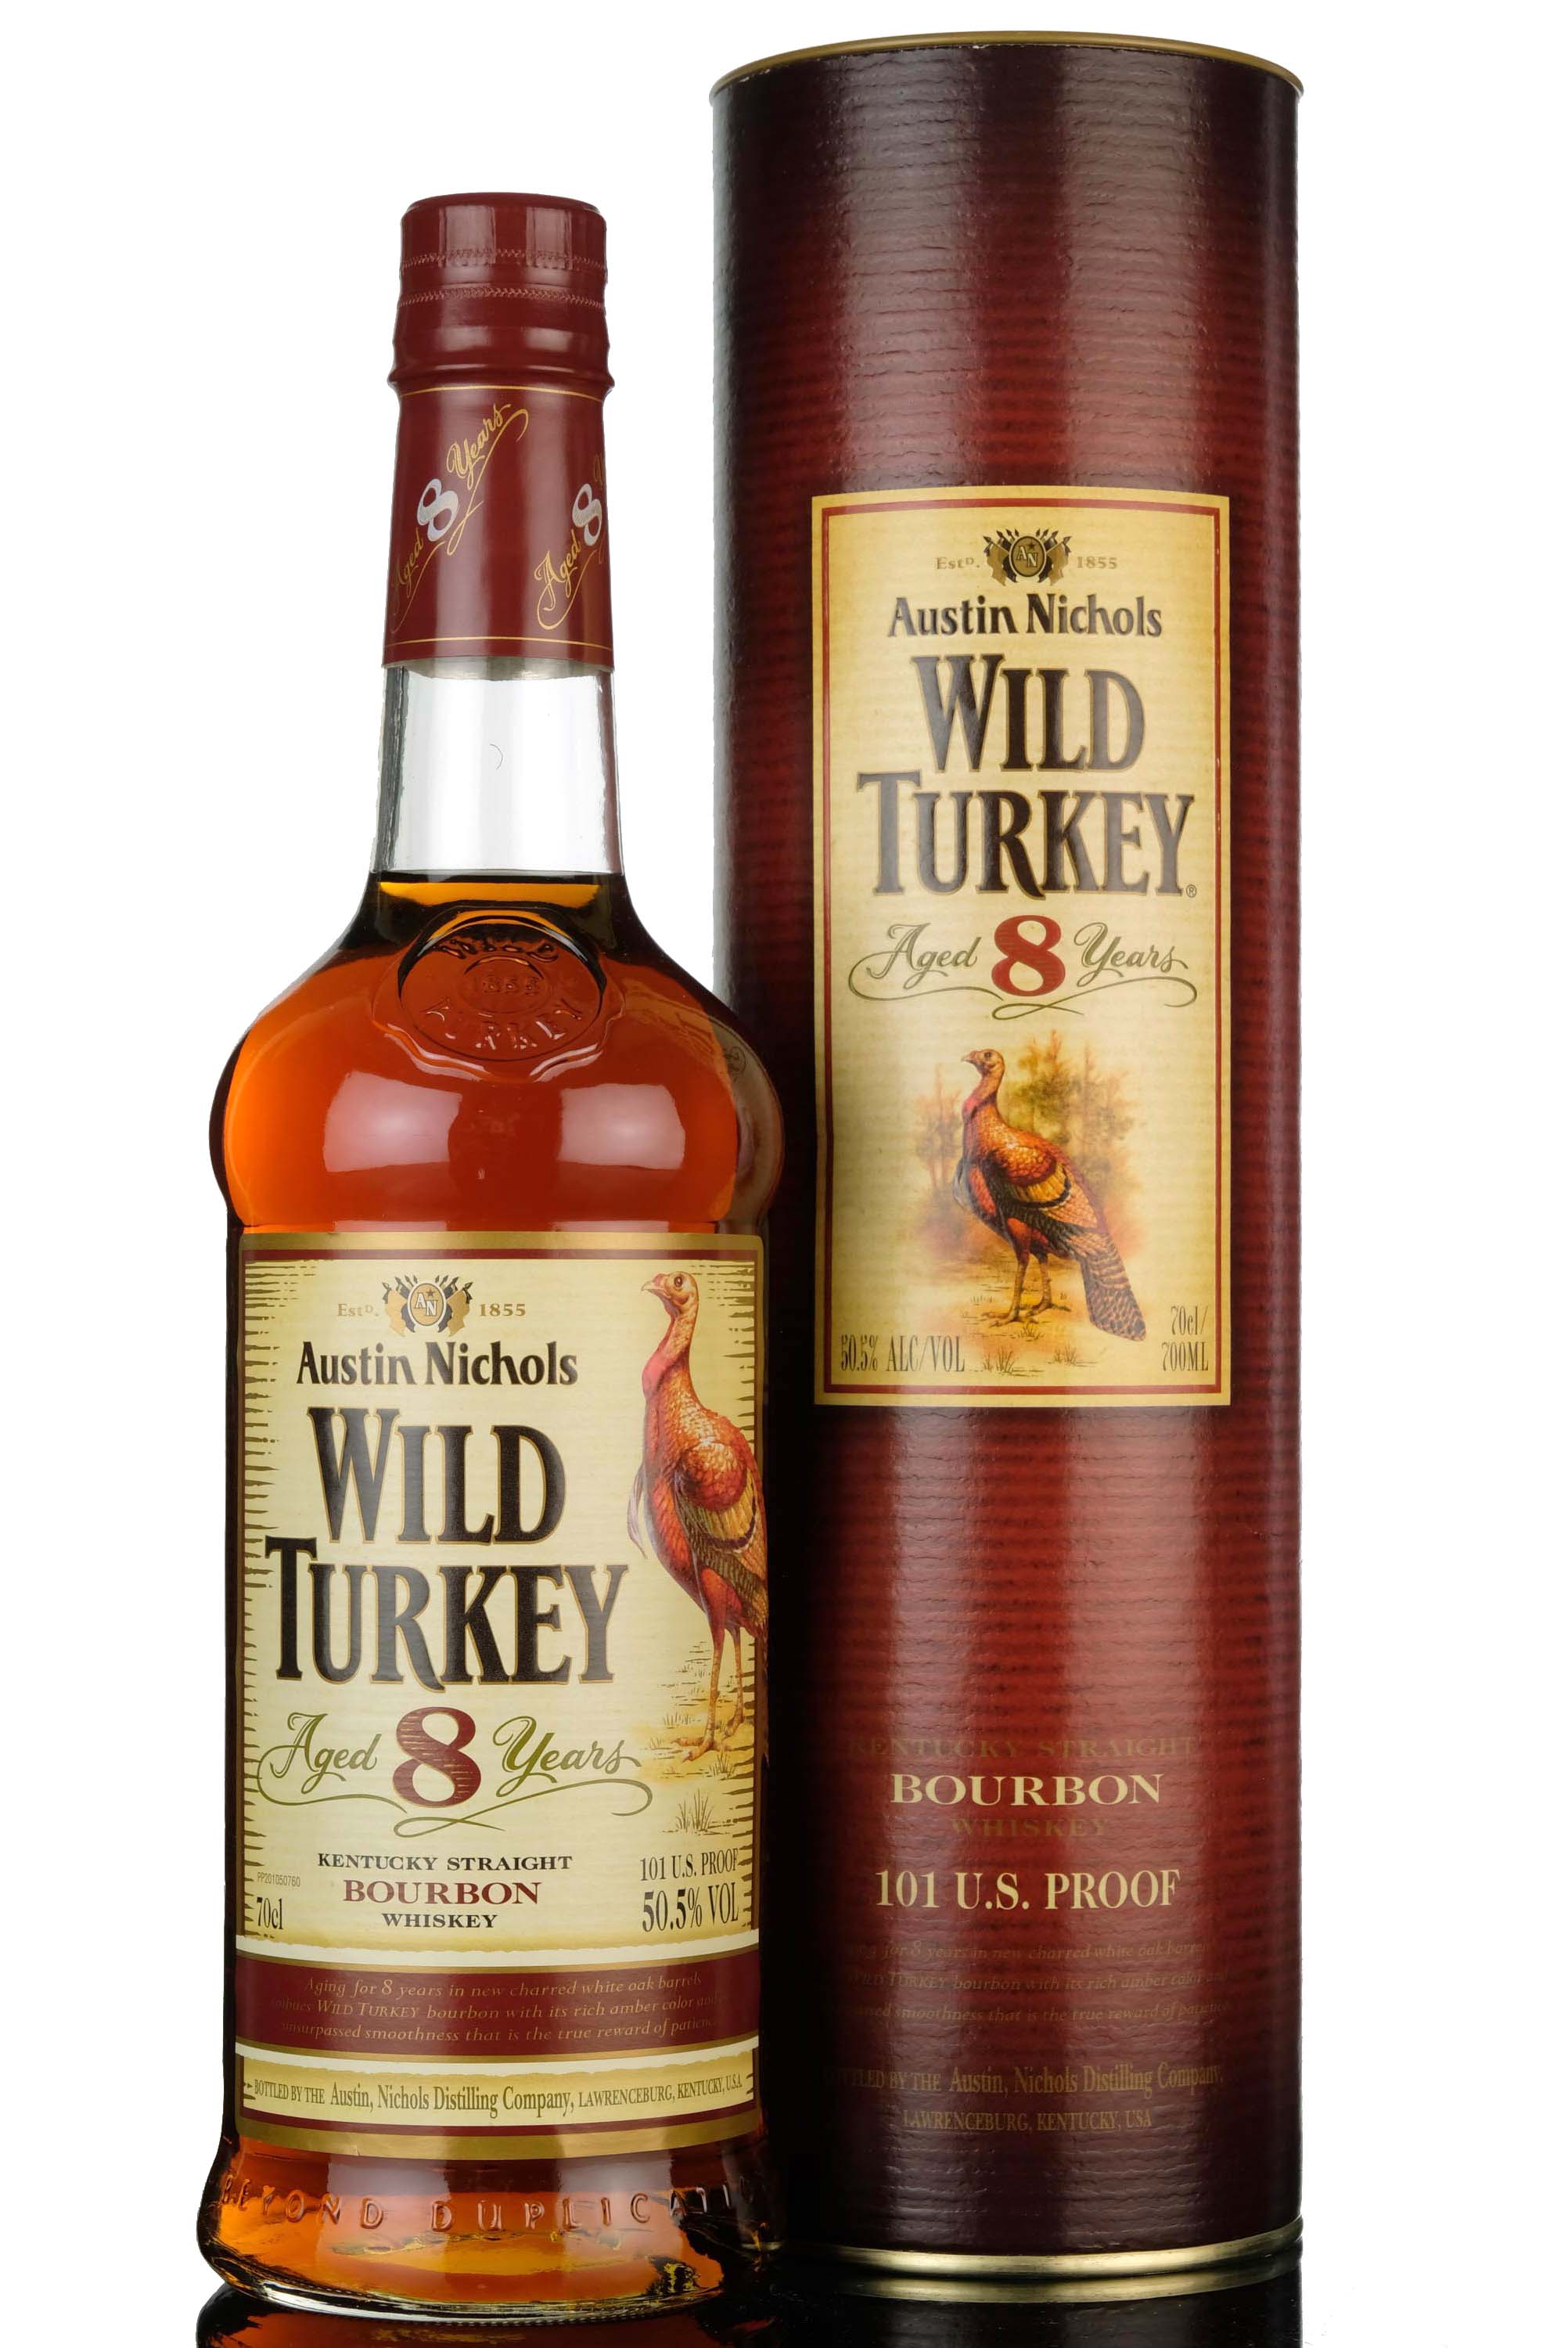 Austin Nichols Wild Turkey 8 Year Old - 101 Proof - 2003 Release